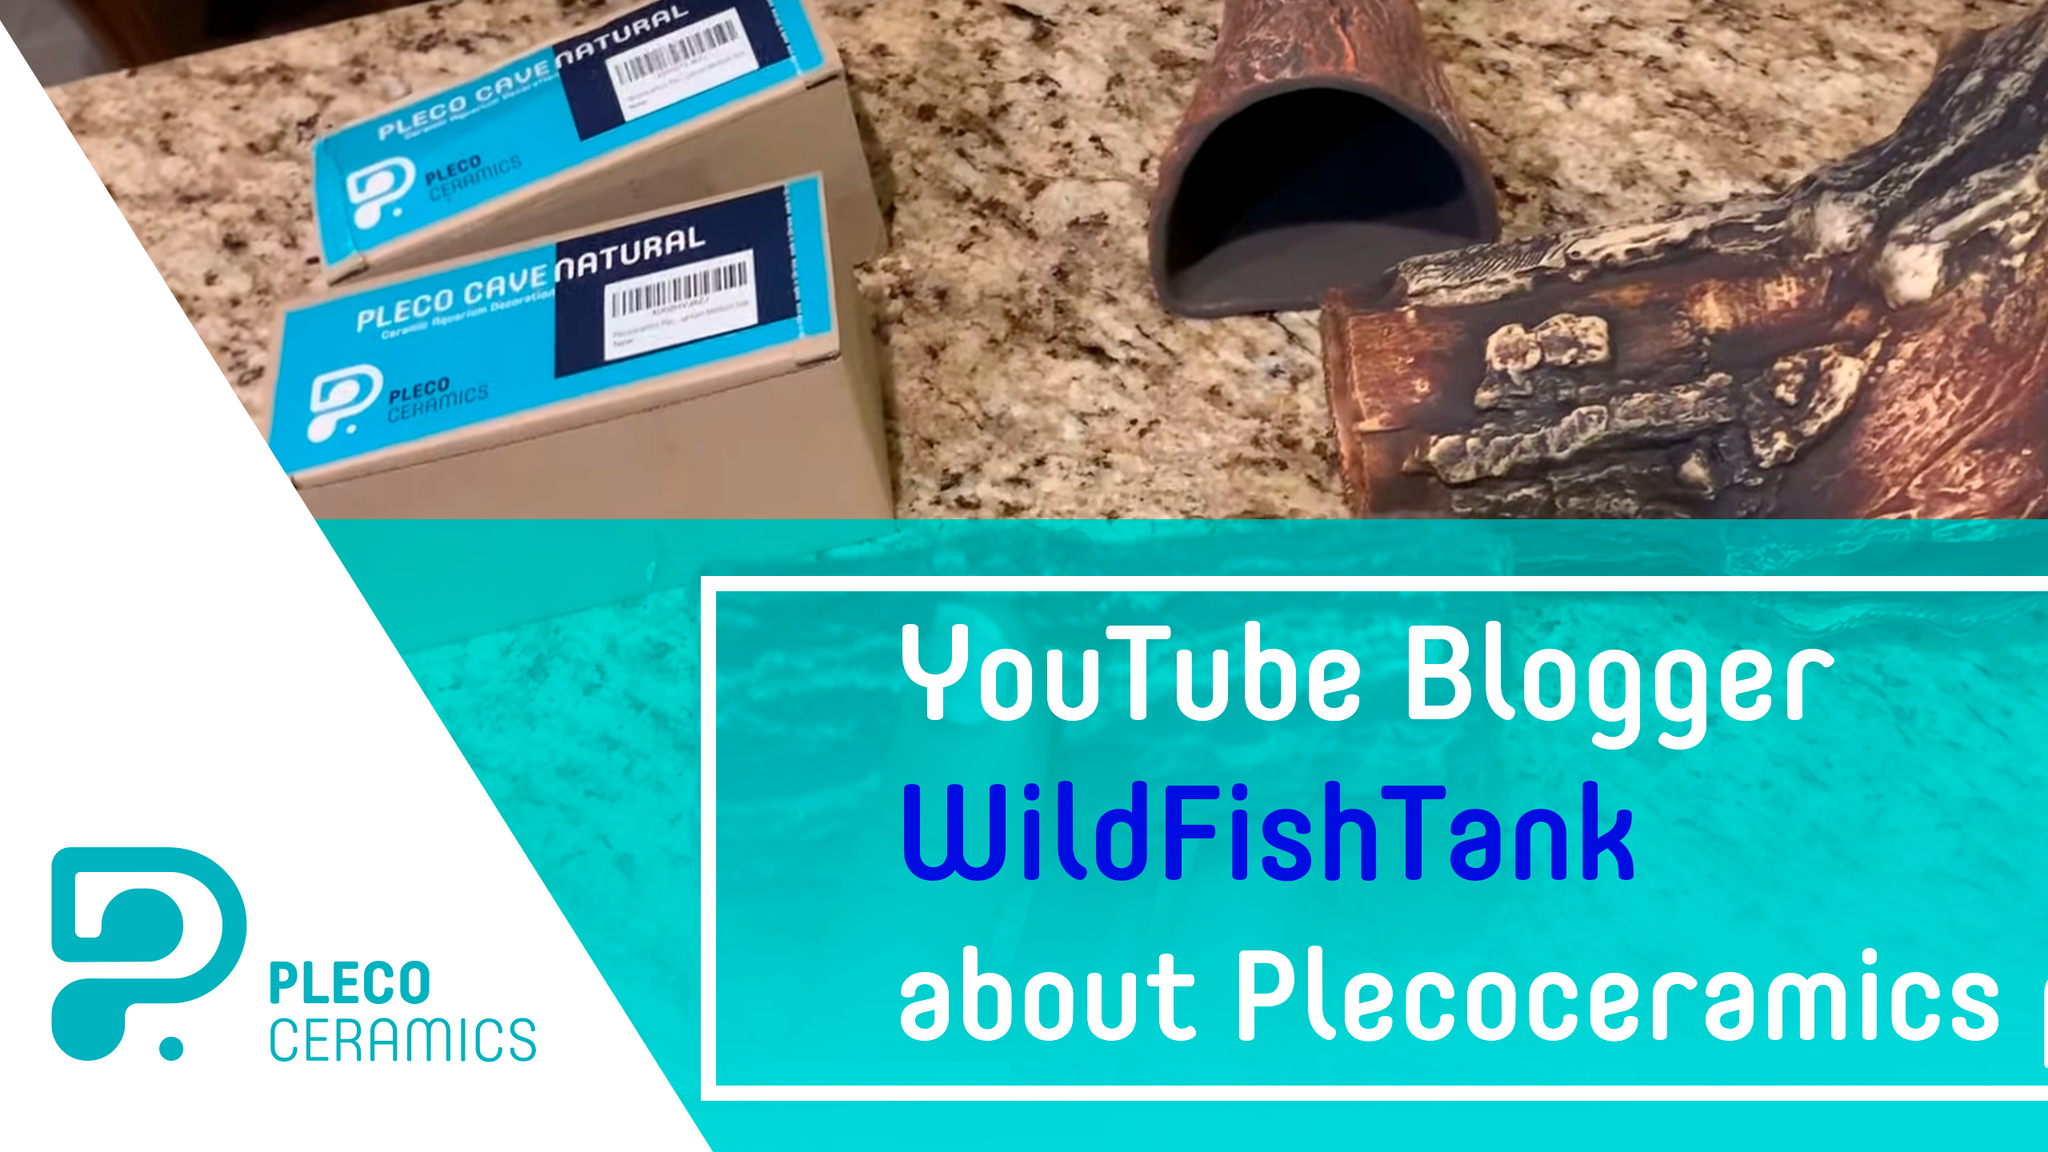 YouTube Blogger WildFishTank about Plecoceramics products